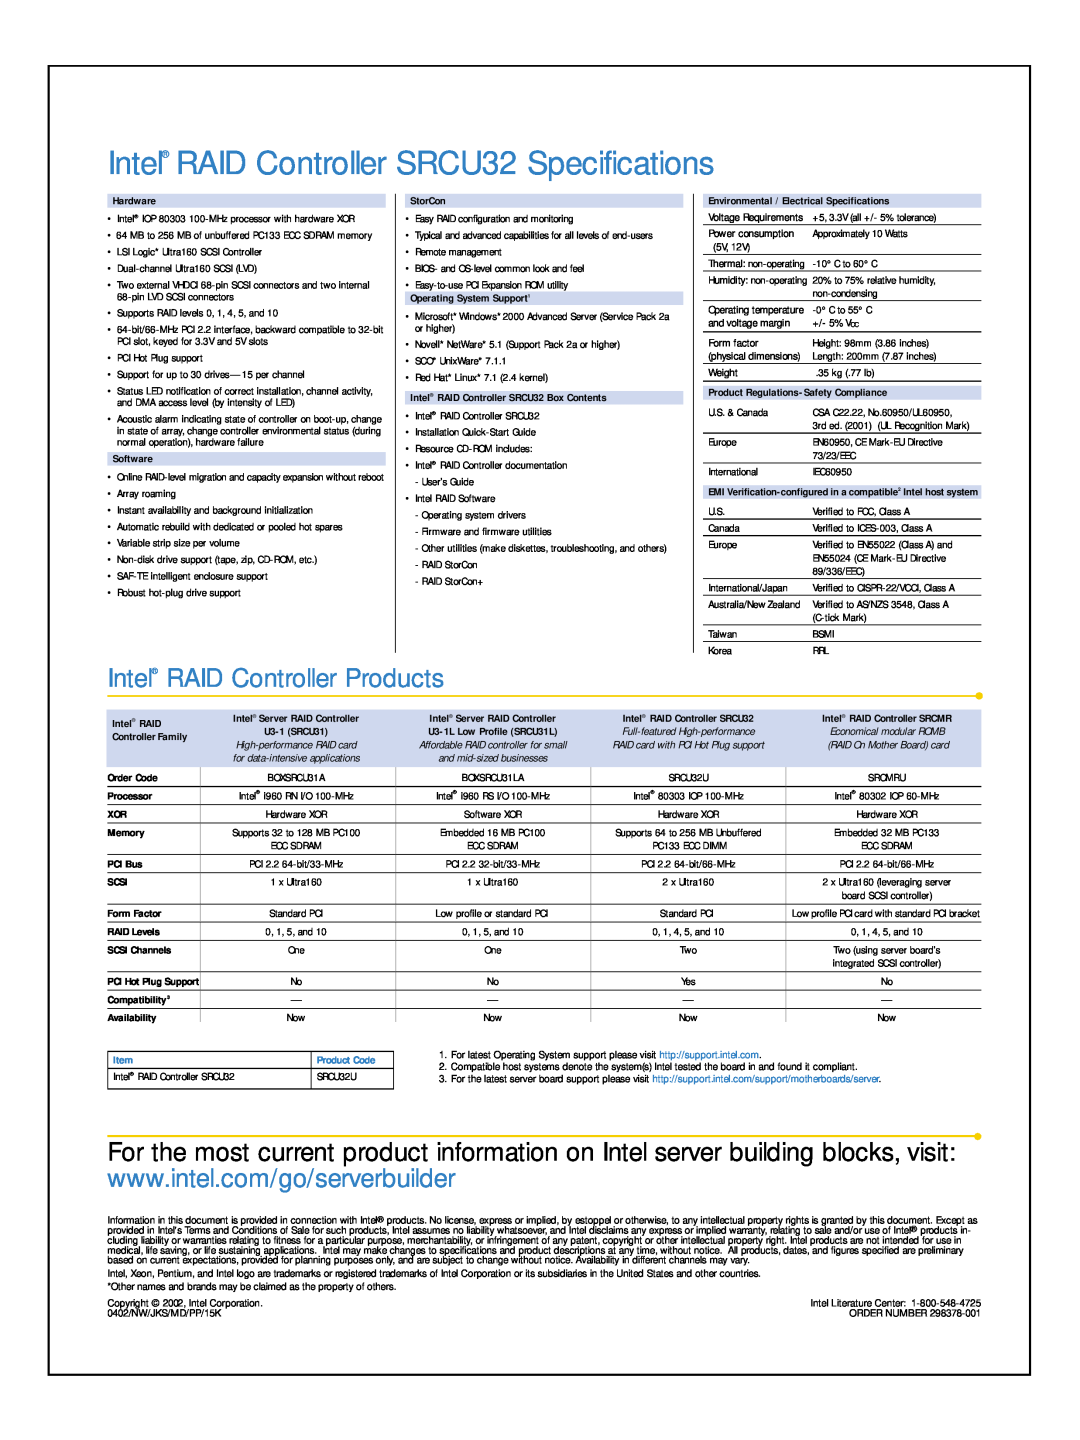 Intel manual Intel RAID Controller Products, Hardware, Software, StorCon, Operating System Support1, BOXSRCU31A, SRCU32U 